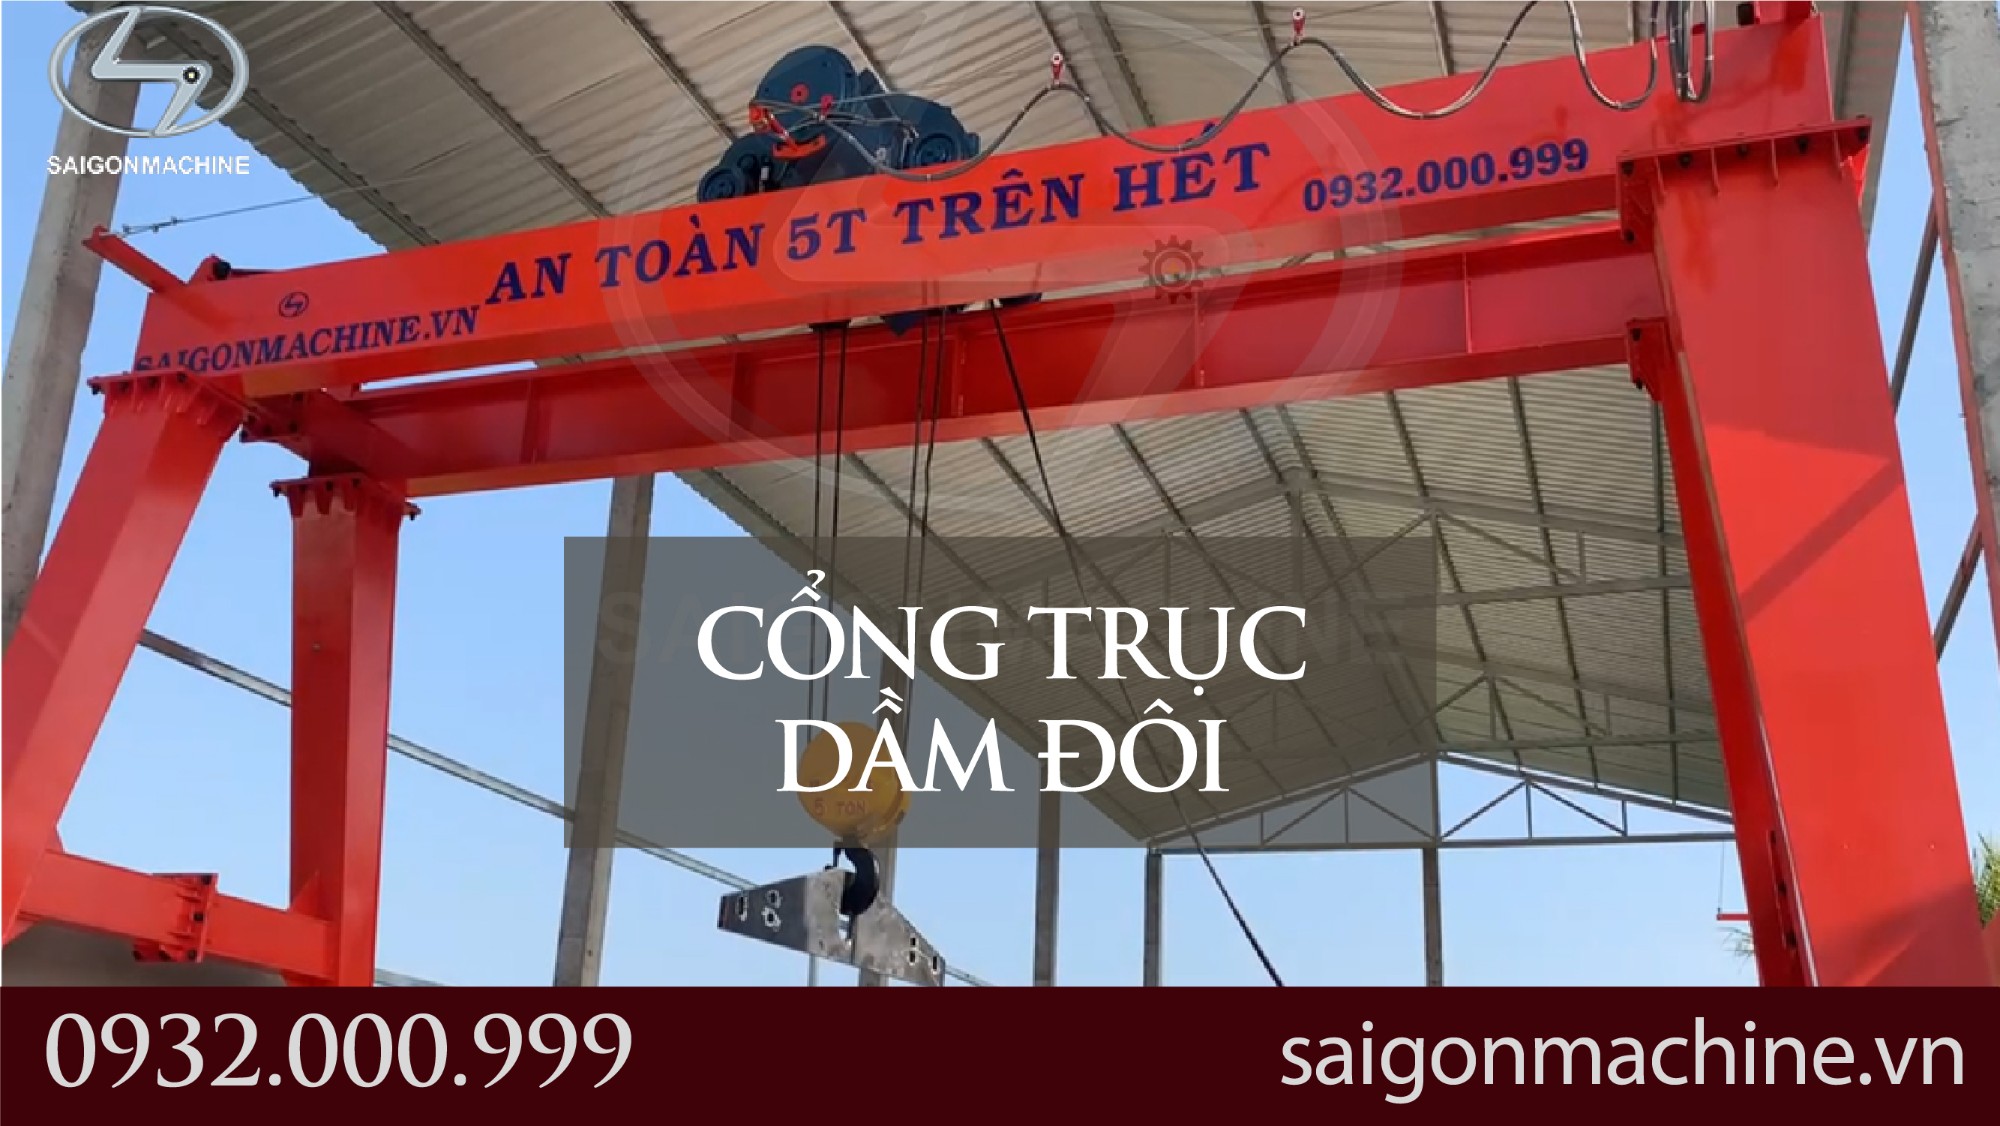 Cổng trục dầm đôi |Single girder gantry crane | #SaigonMachine #SGM #congtruc #maycanton #palang